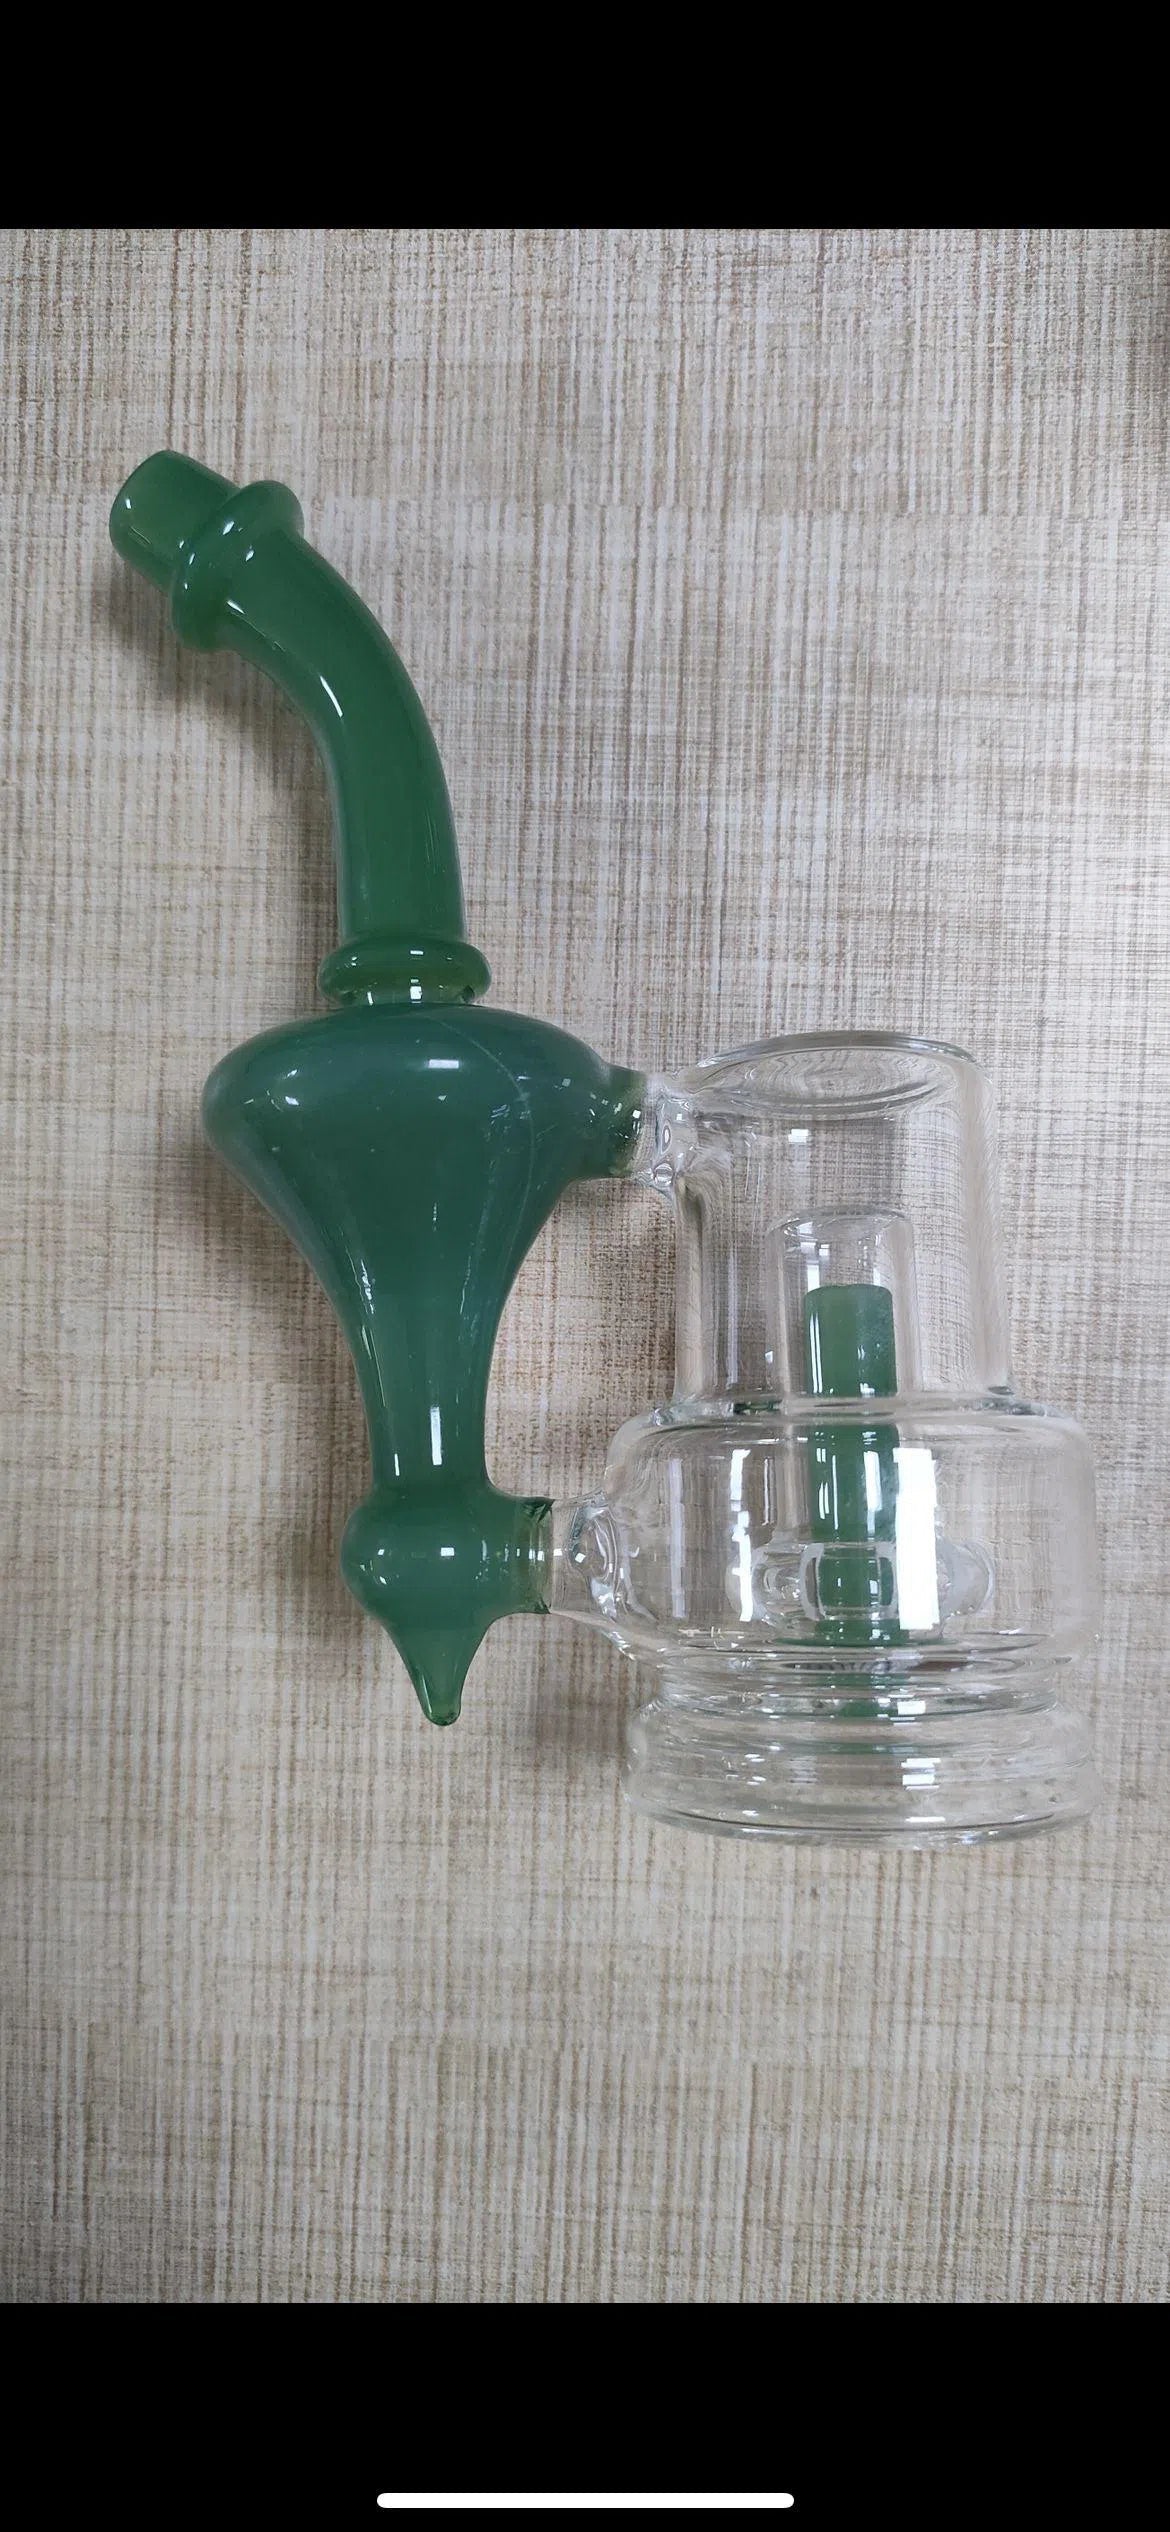 JCVAP Whip for Pro Anti WaterAbsorption Glass-JCVAP-Jade Blue-NYC Glass